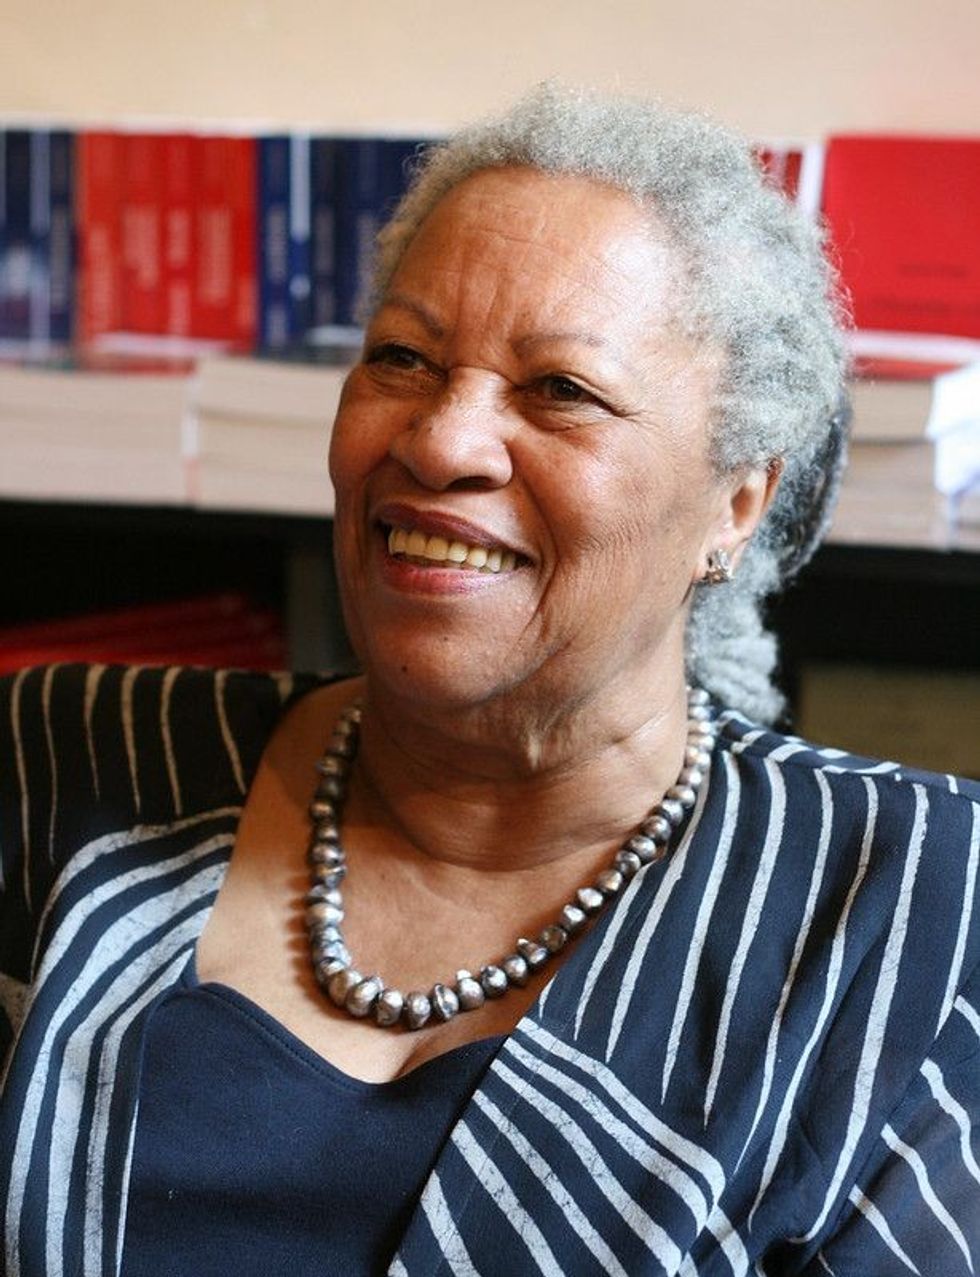 Smiling picture of Toni Morrison